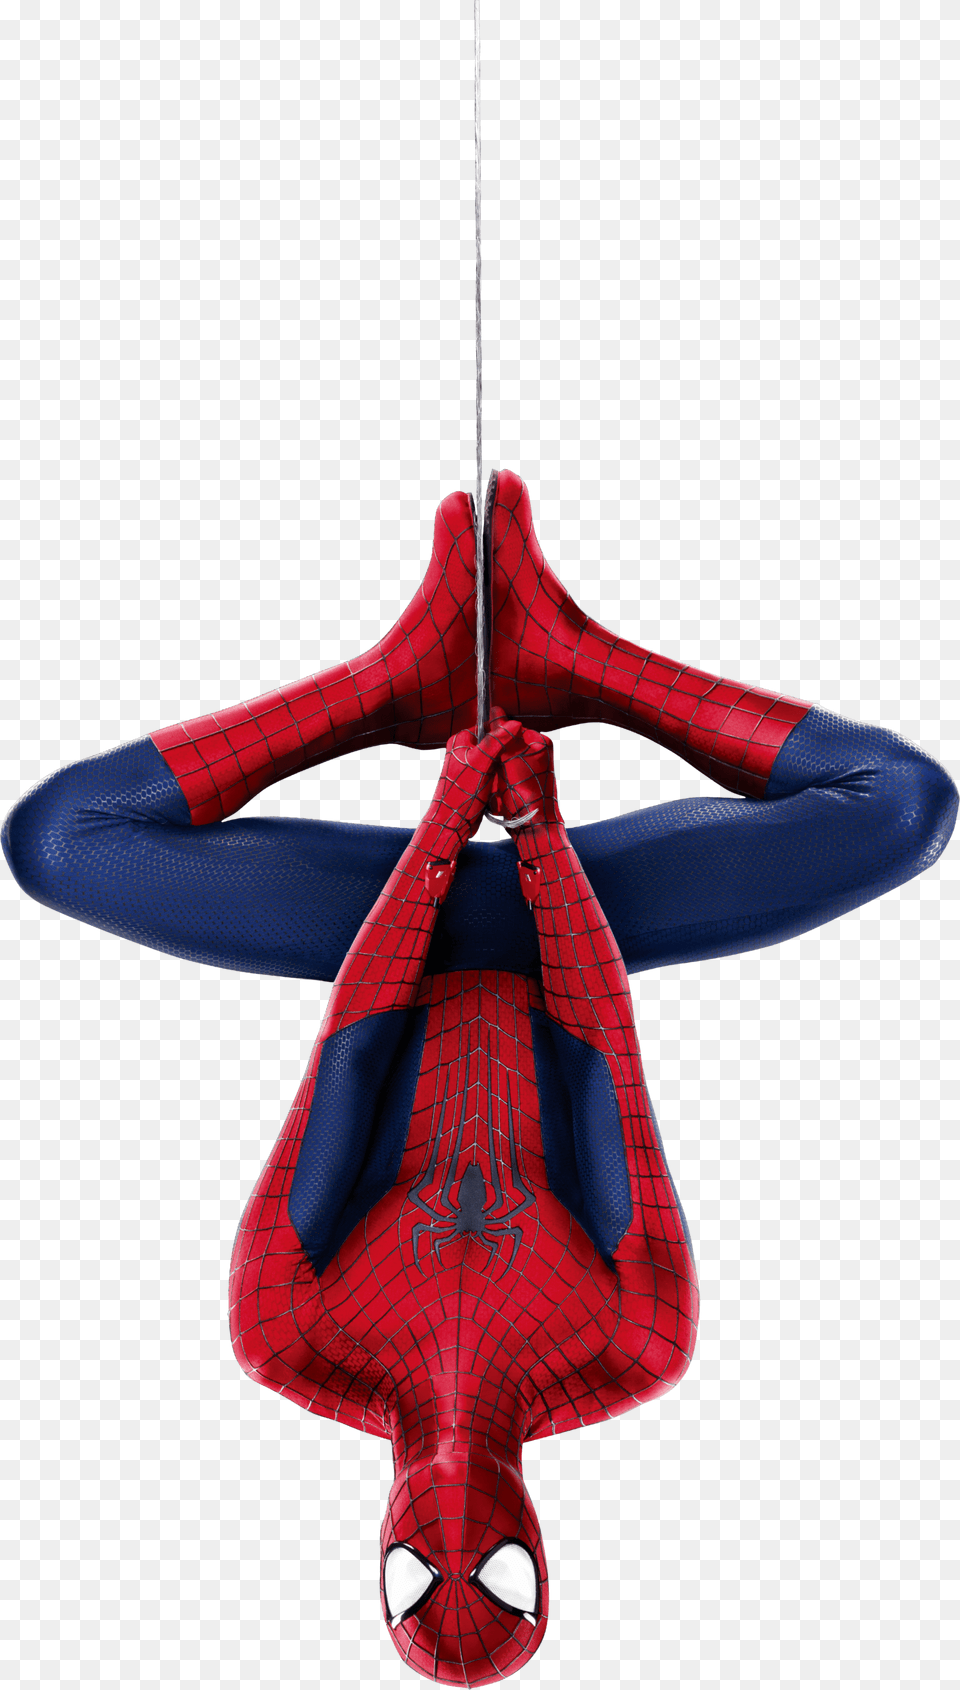 Spiderman Hanging Upside Down Download Spiderman, Clothing, Hosiery, Sock, Acrobatic Free Transparent Png